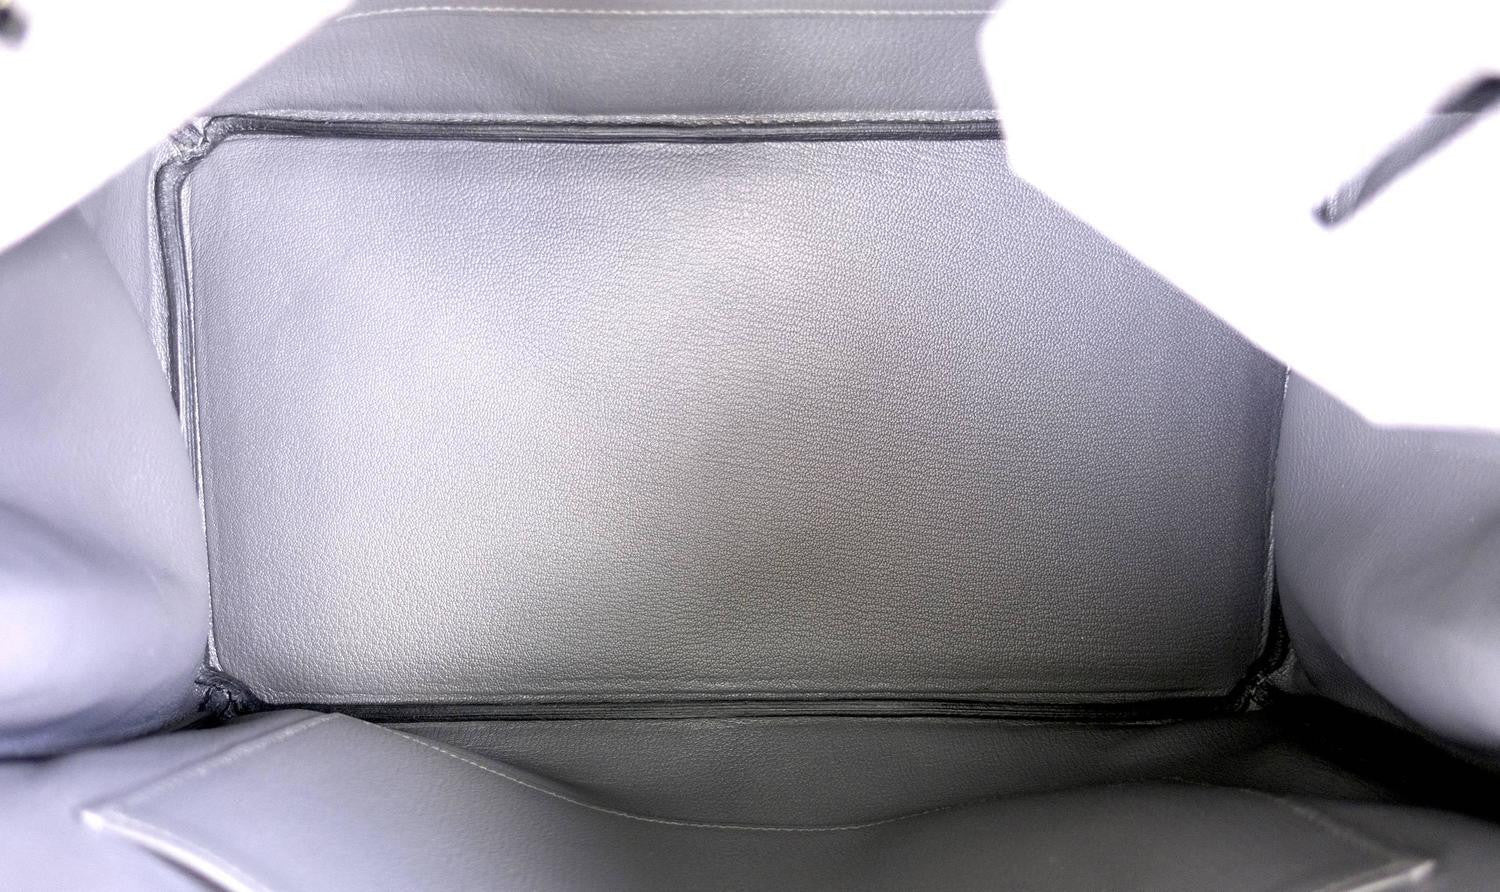 Hermes Birkin Bag Togo Leather Gold Hardware In Dark Grey